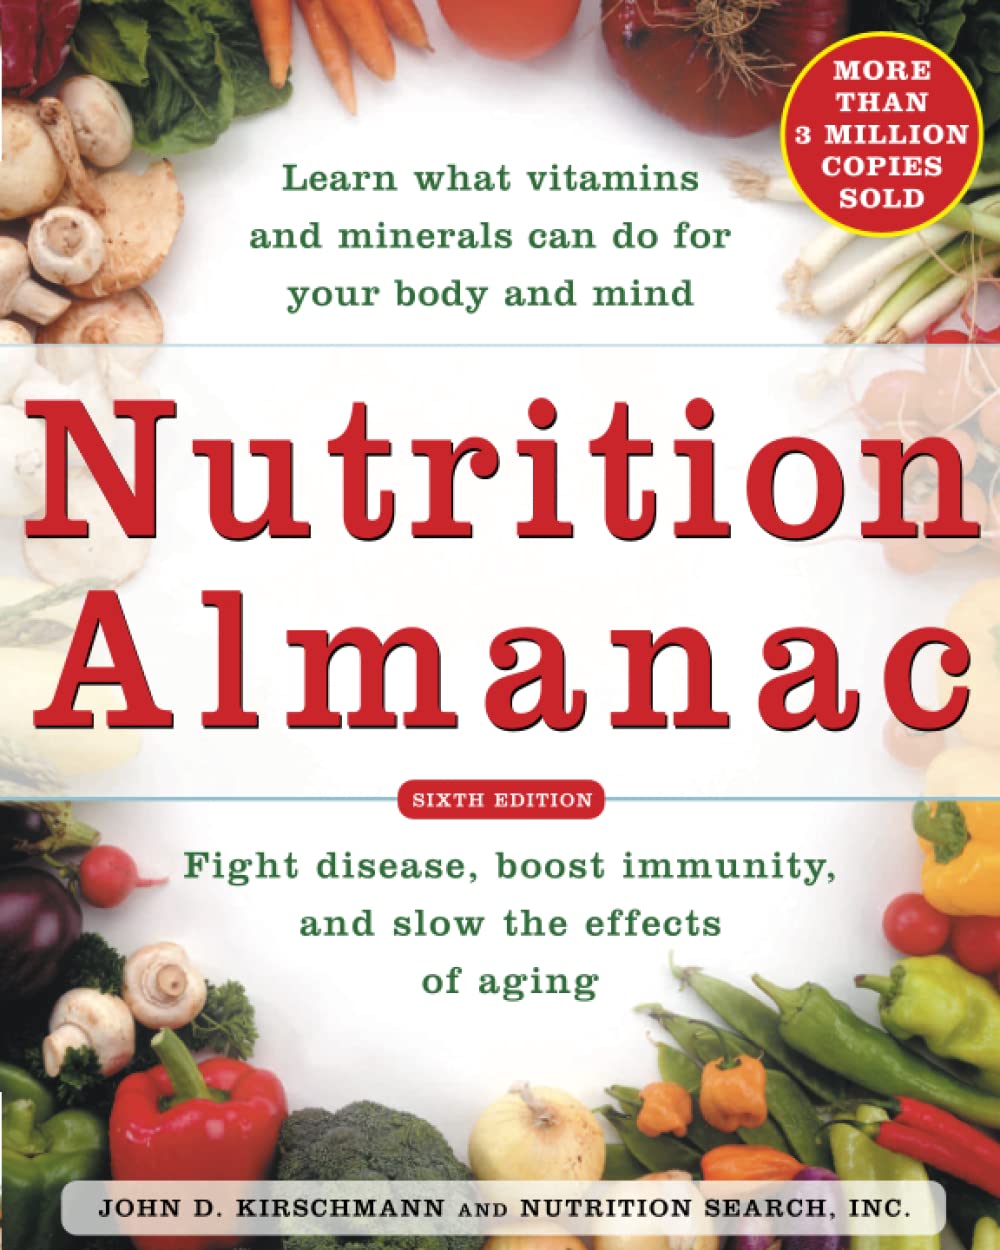 Nutrition Almanac - SureShot Books Publishing LLC